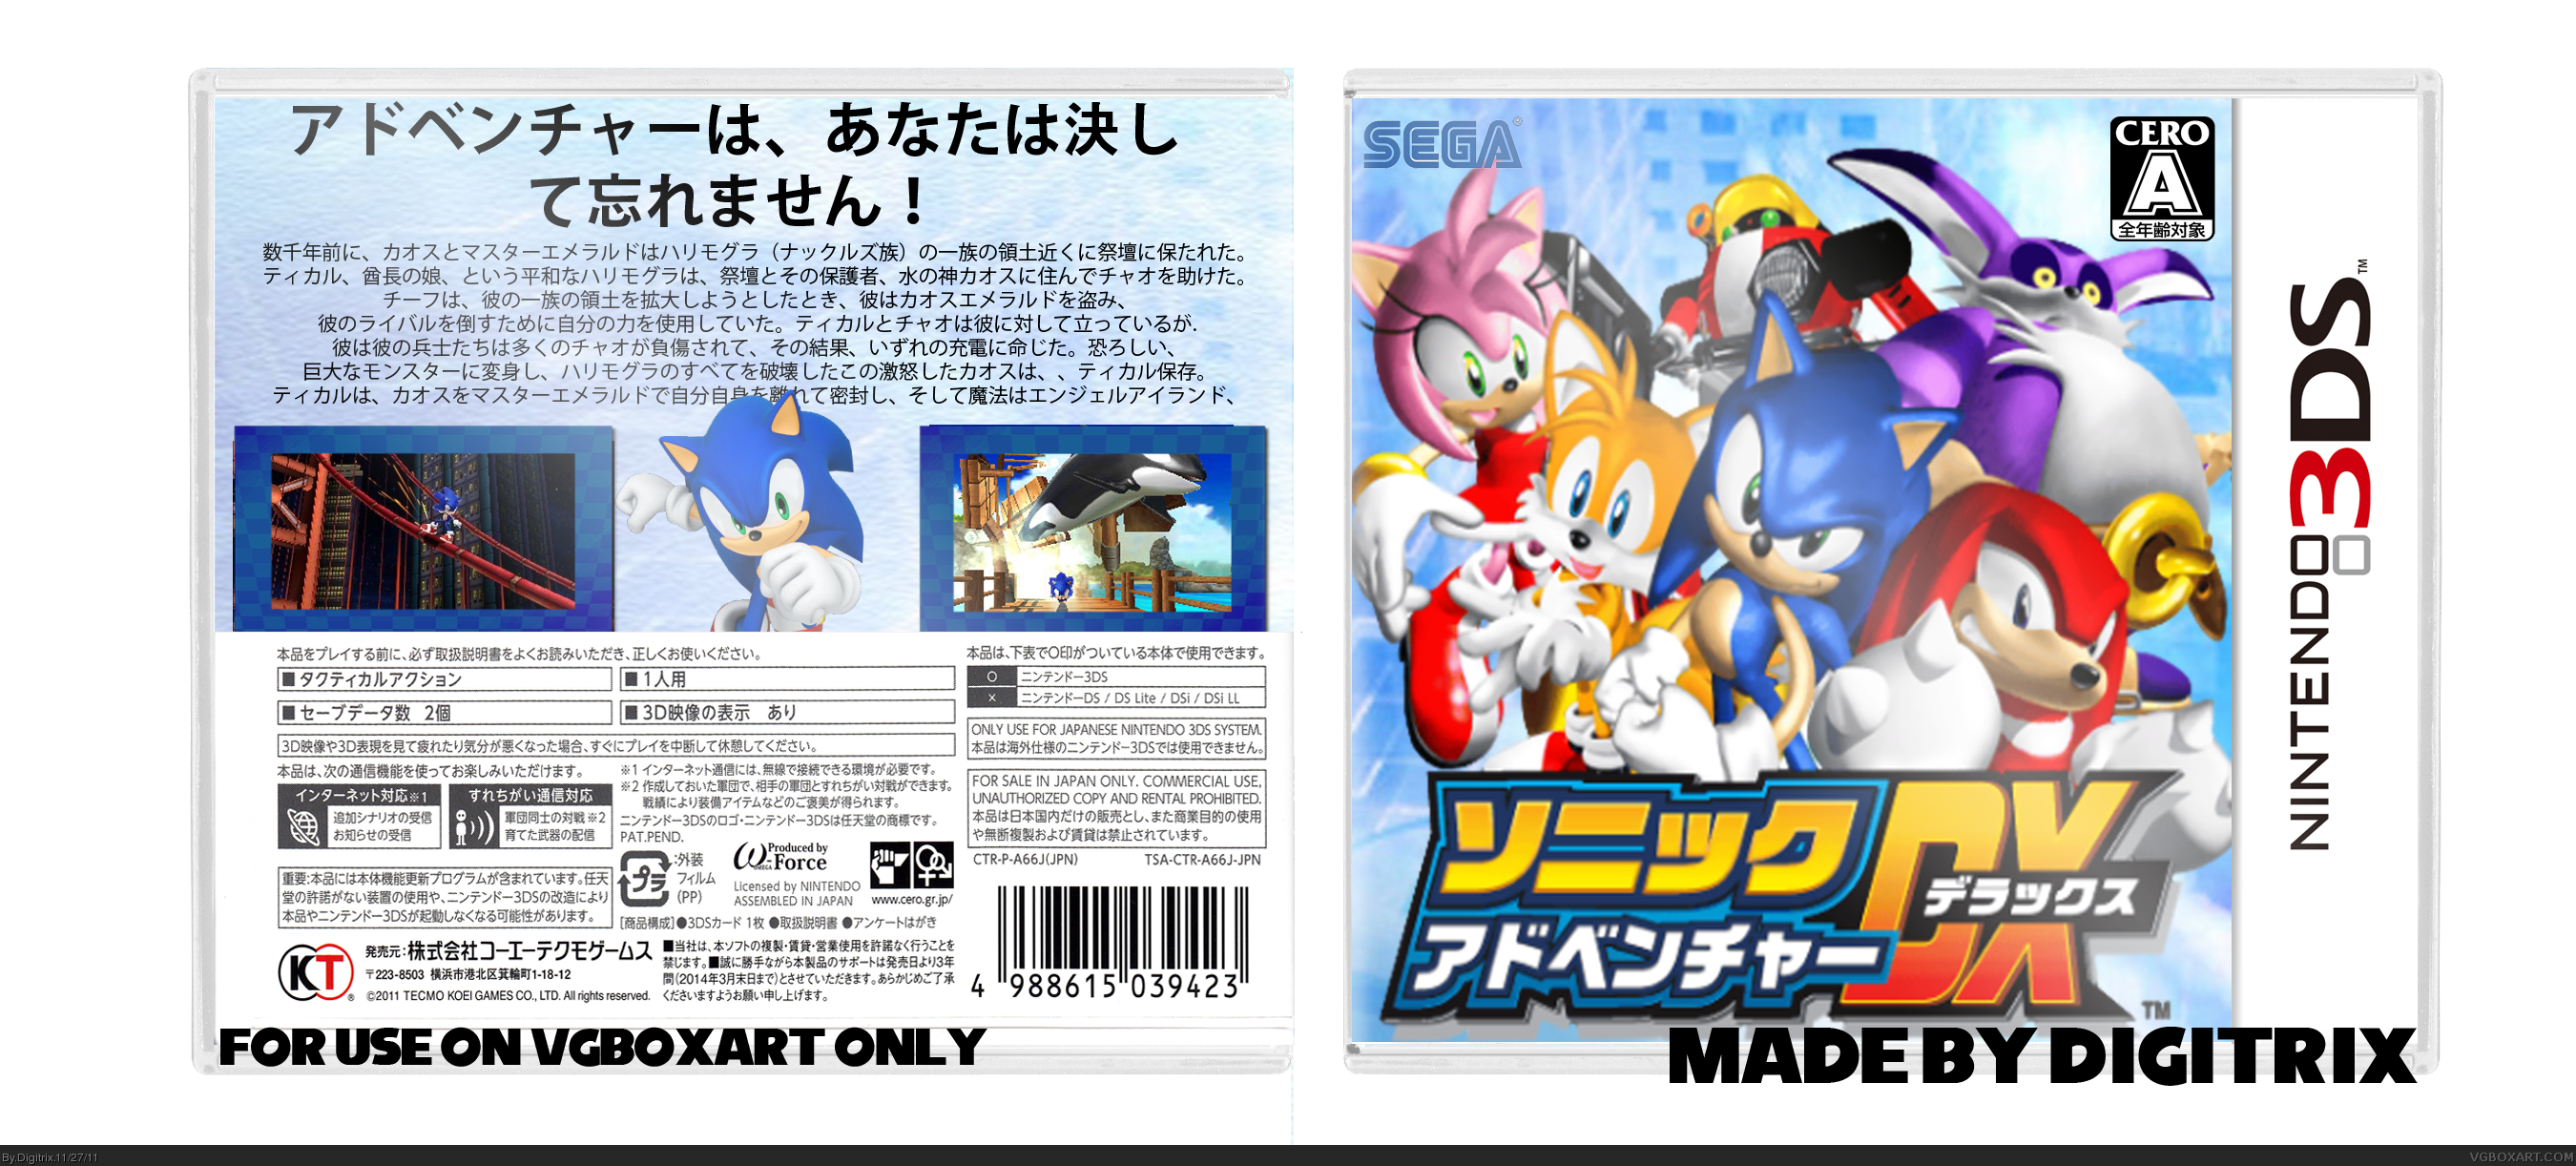 Sonic Adventure (JP) box cover